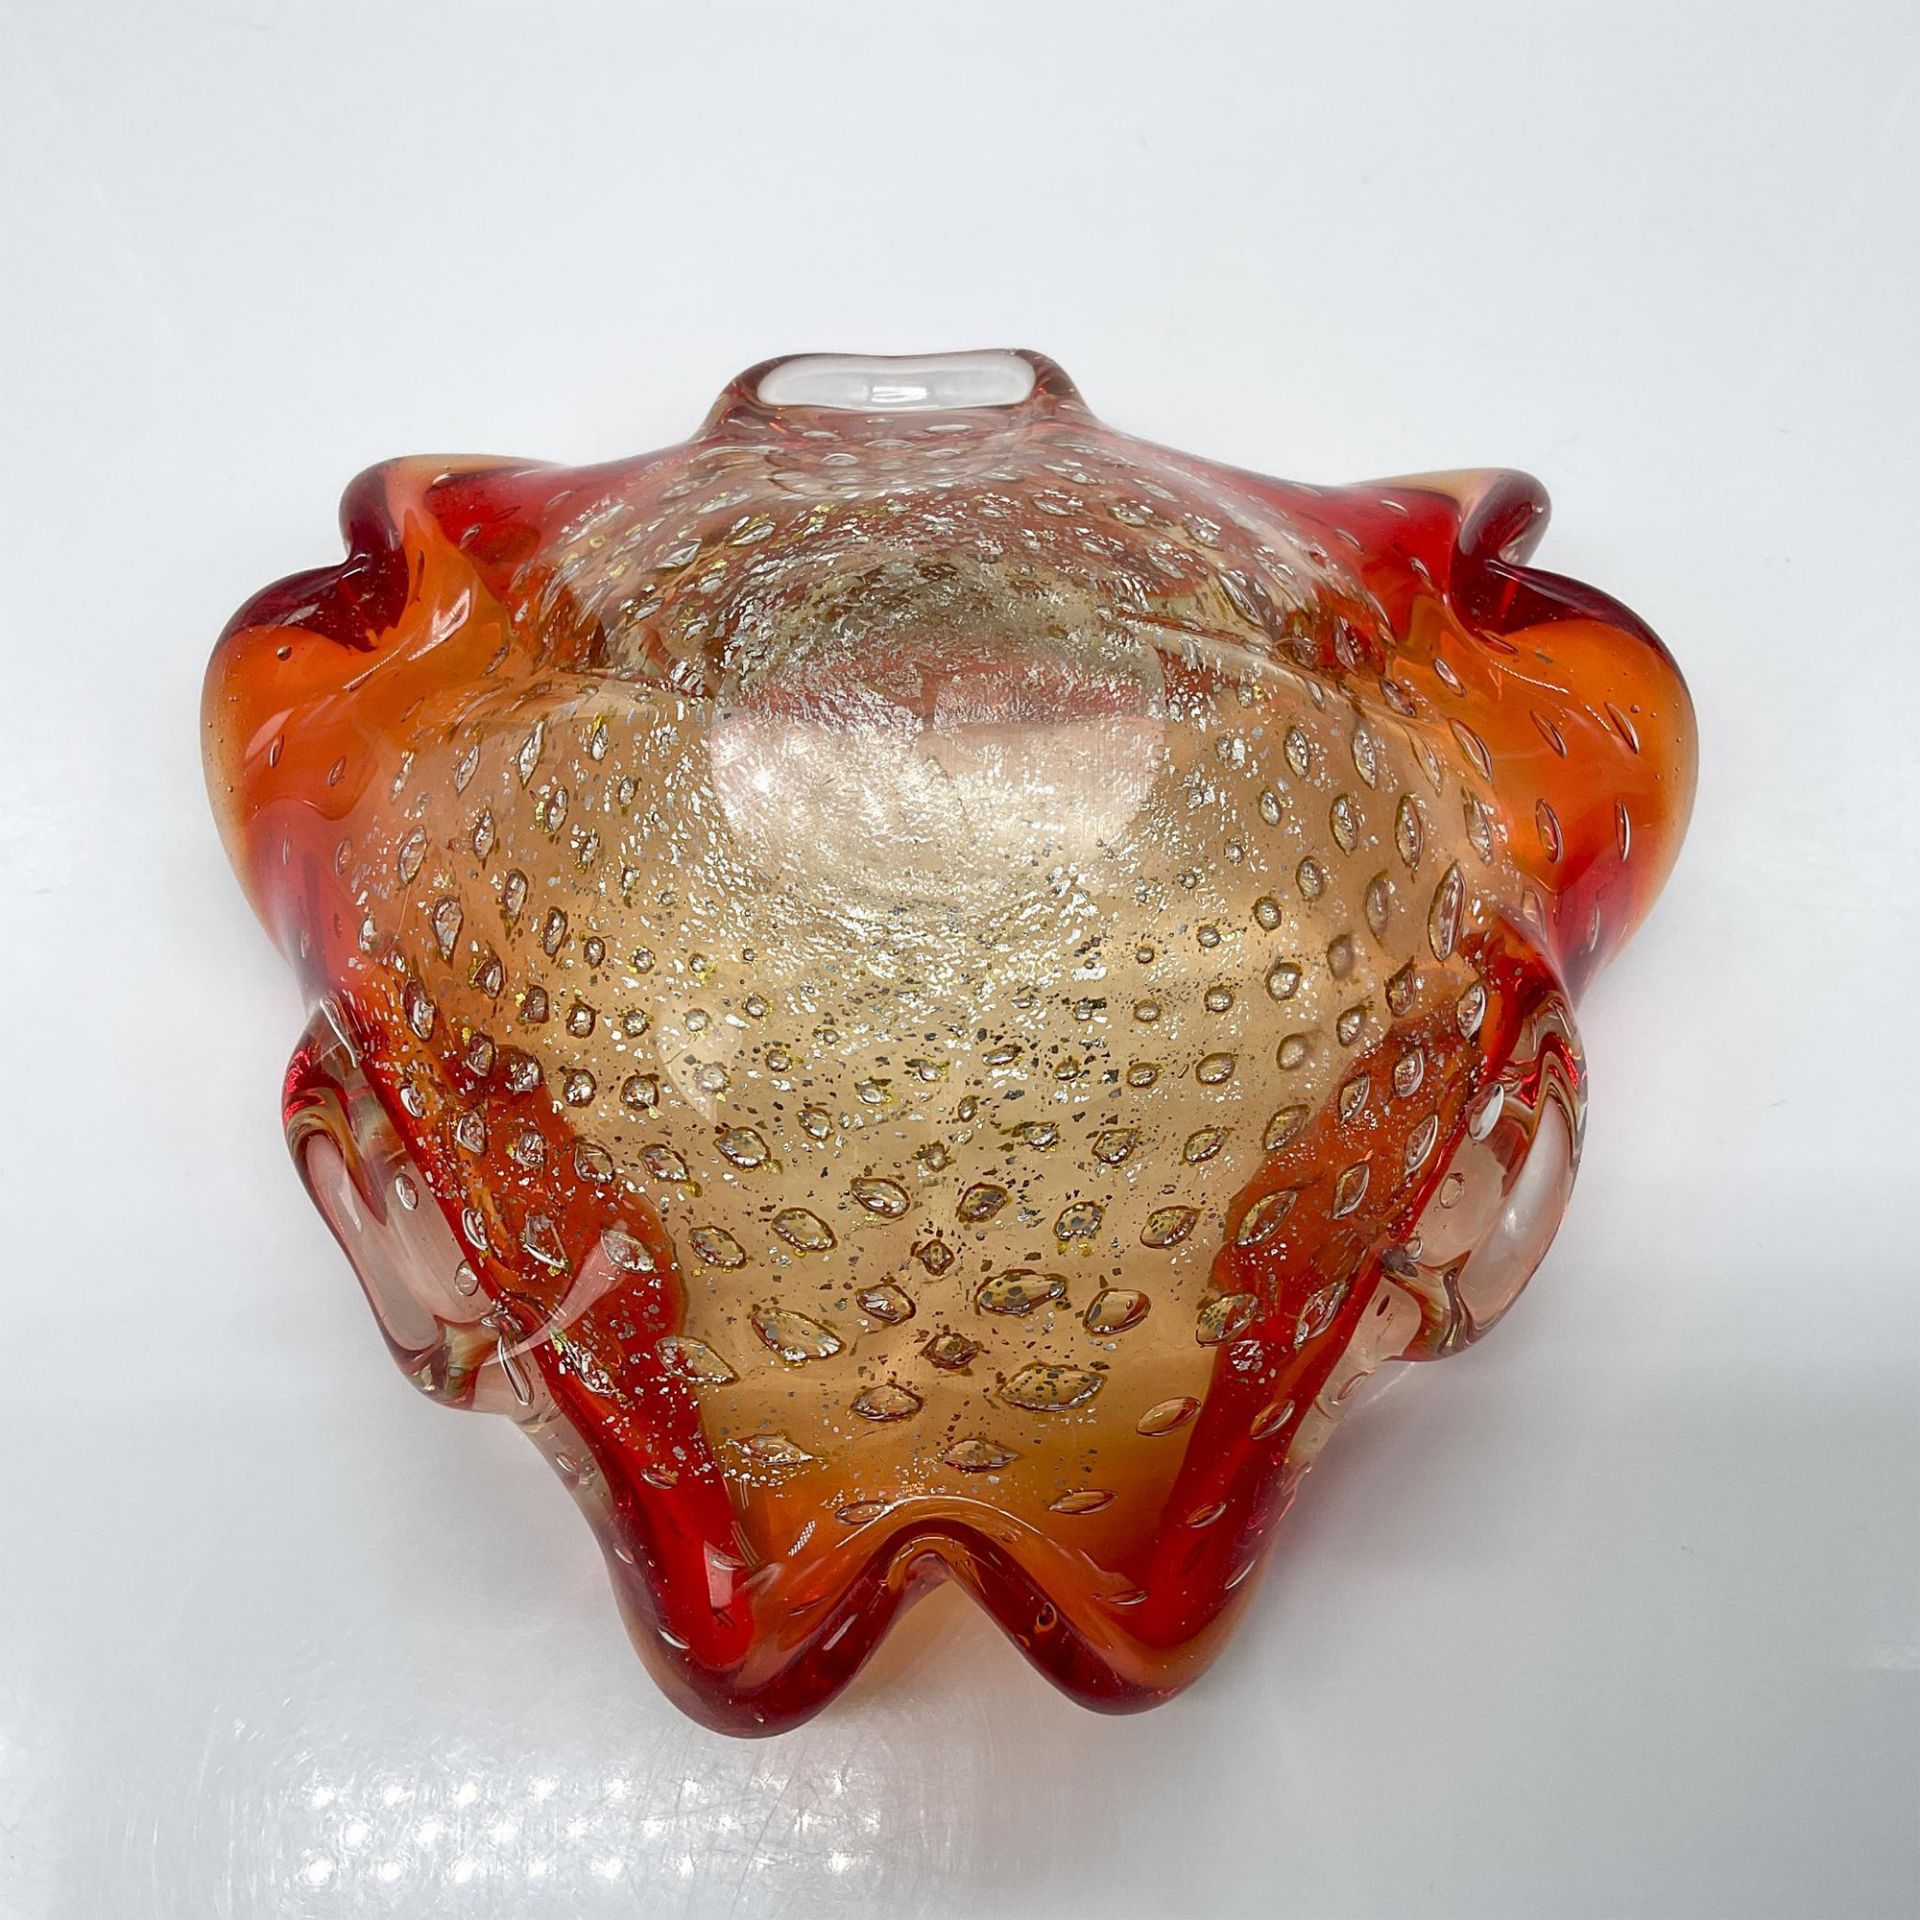 Murano Art Glass Orange and Gold Tones Bowl - Image 3 of 3